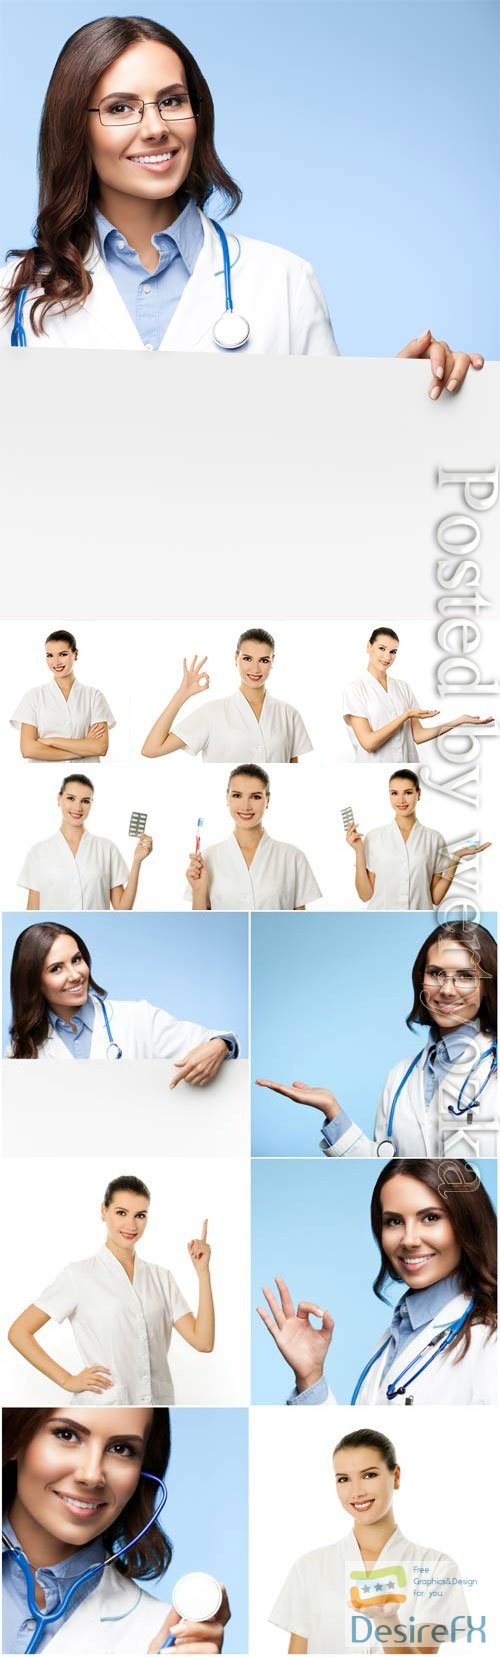 Beautiful woman doctor stock photo